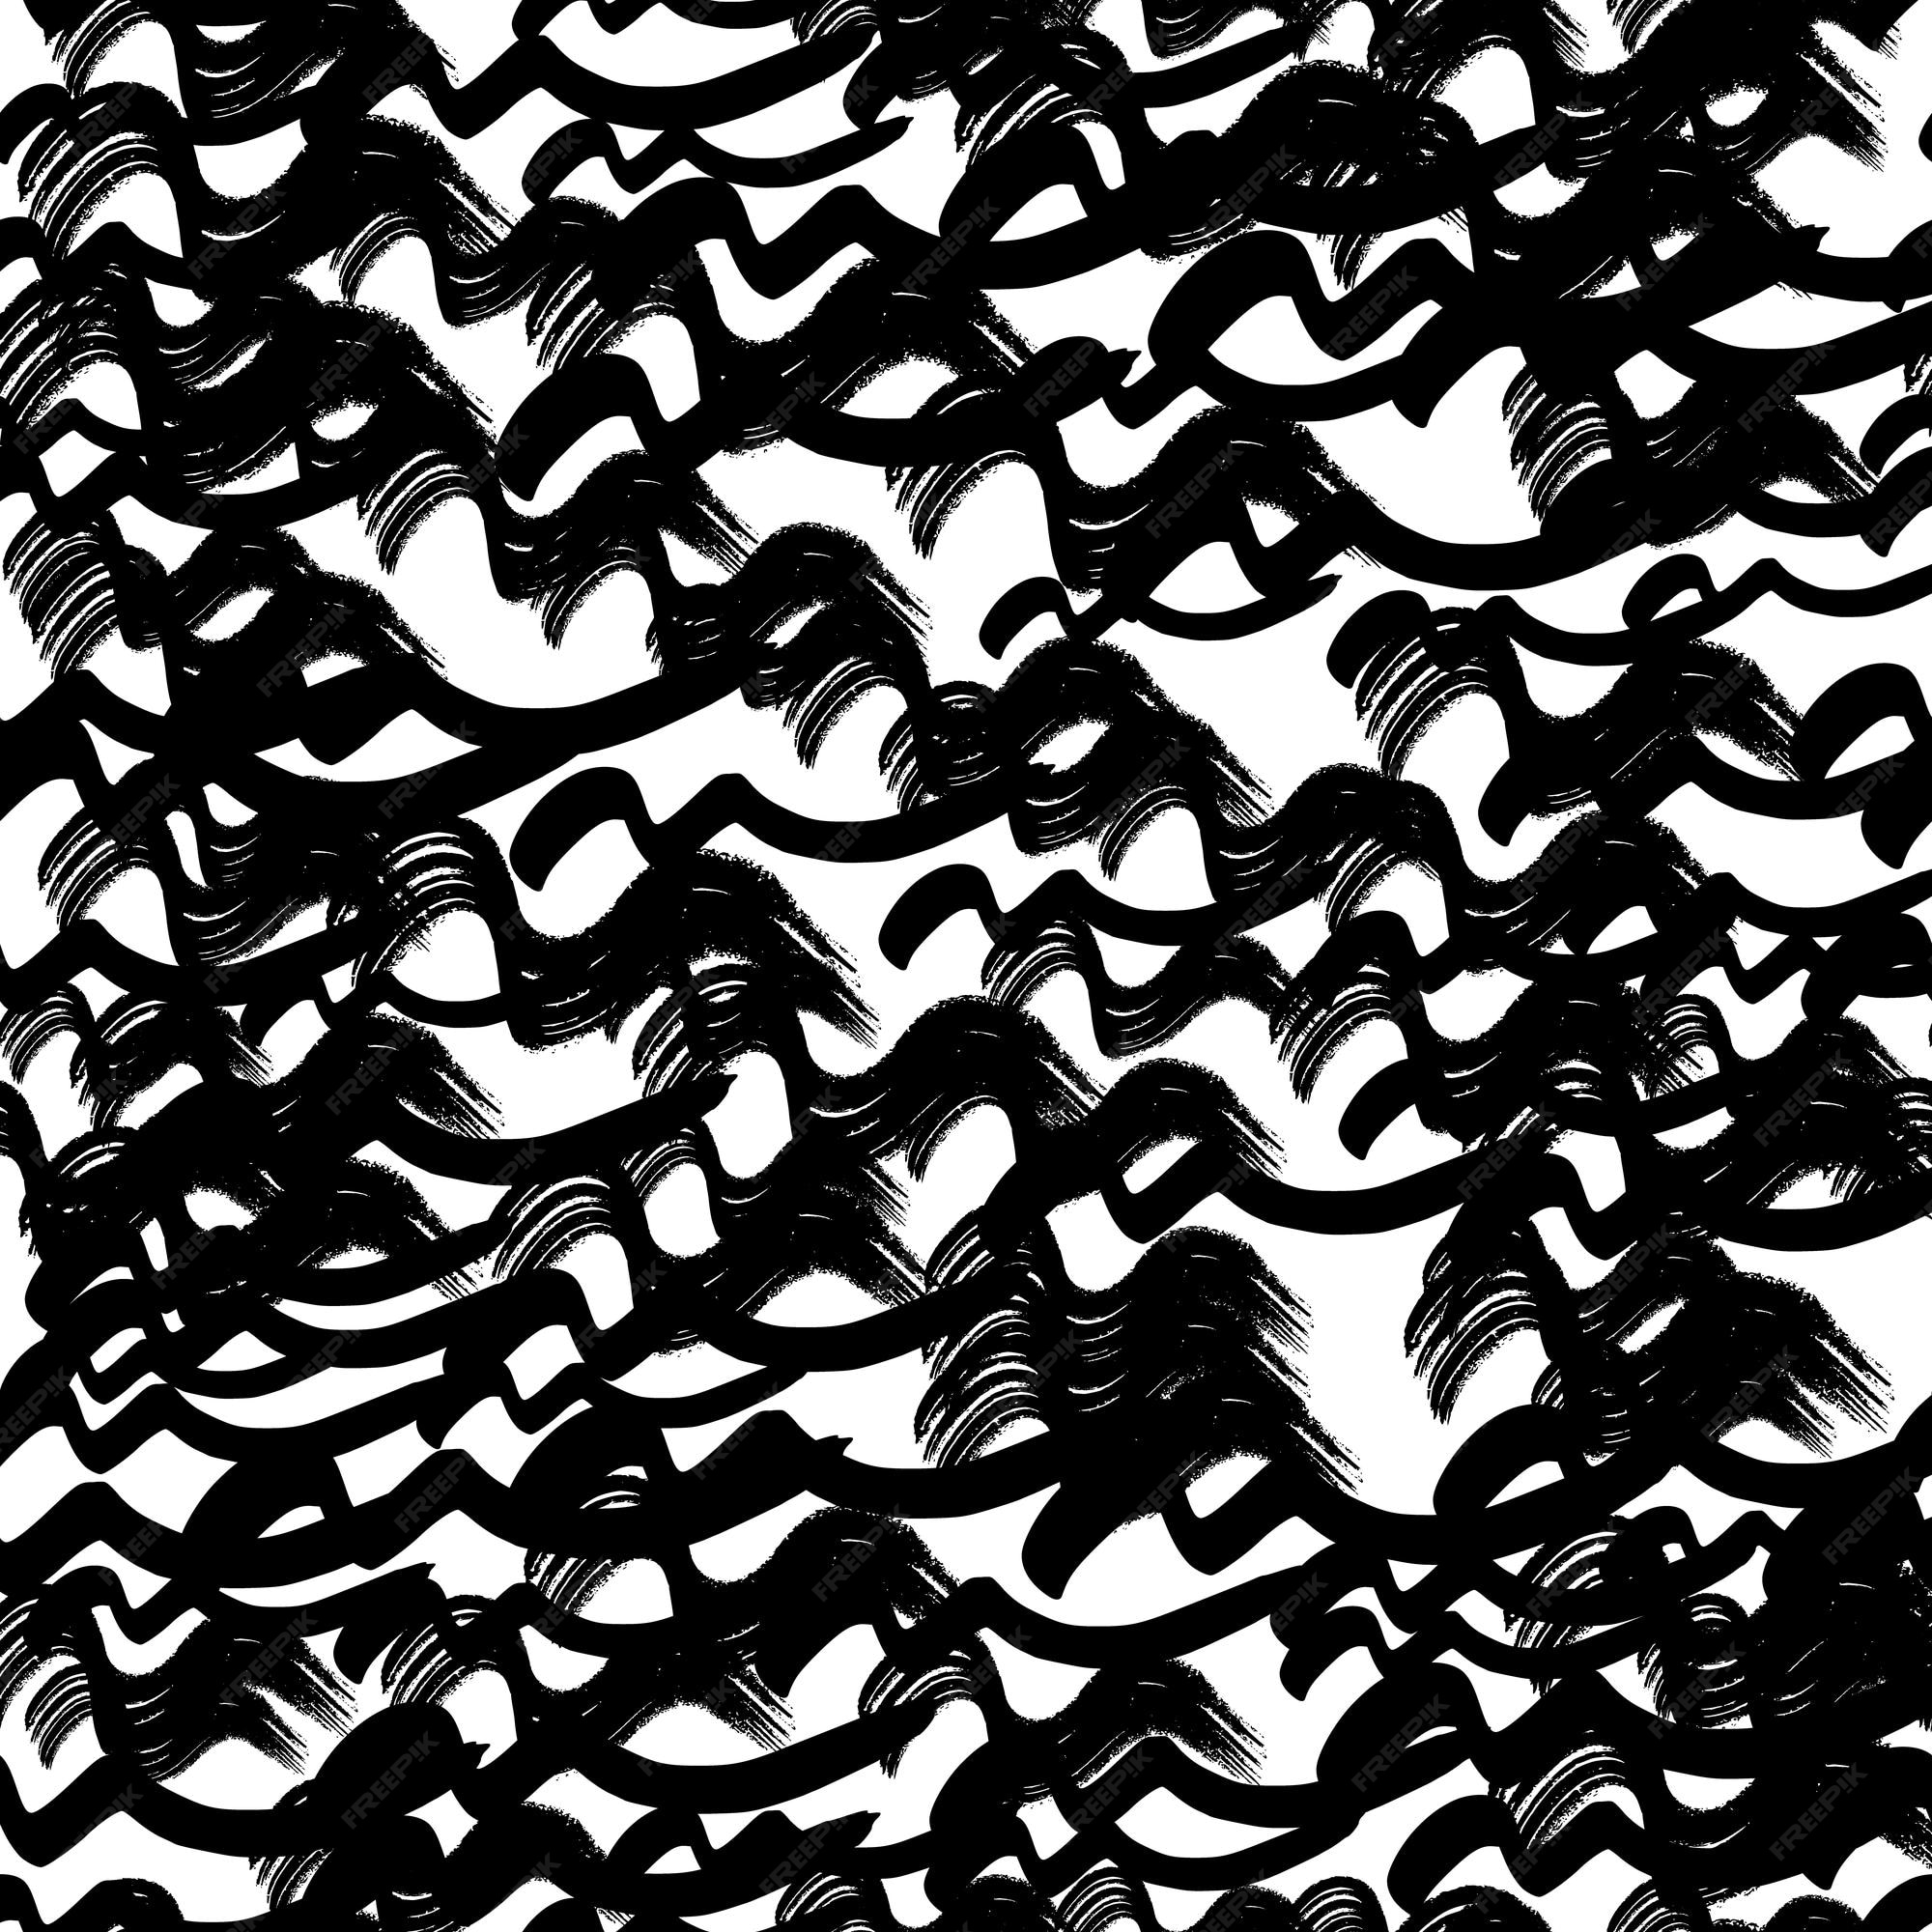 Photo & Art Print grunge spiral wave logo, black brush stroke isolated on  white background